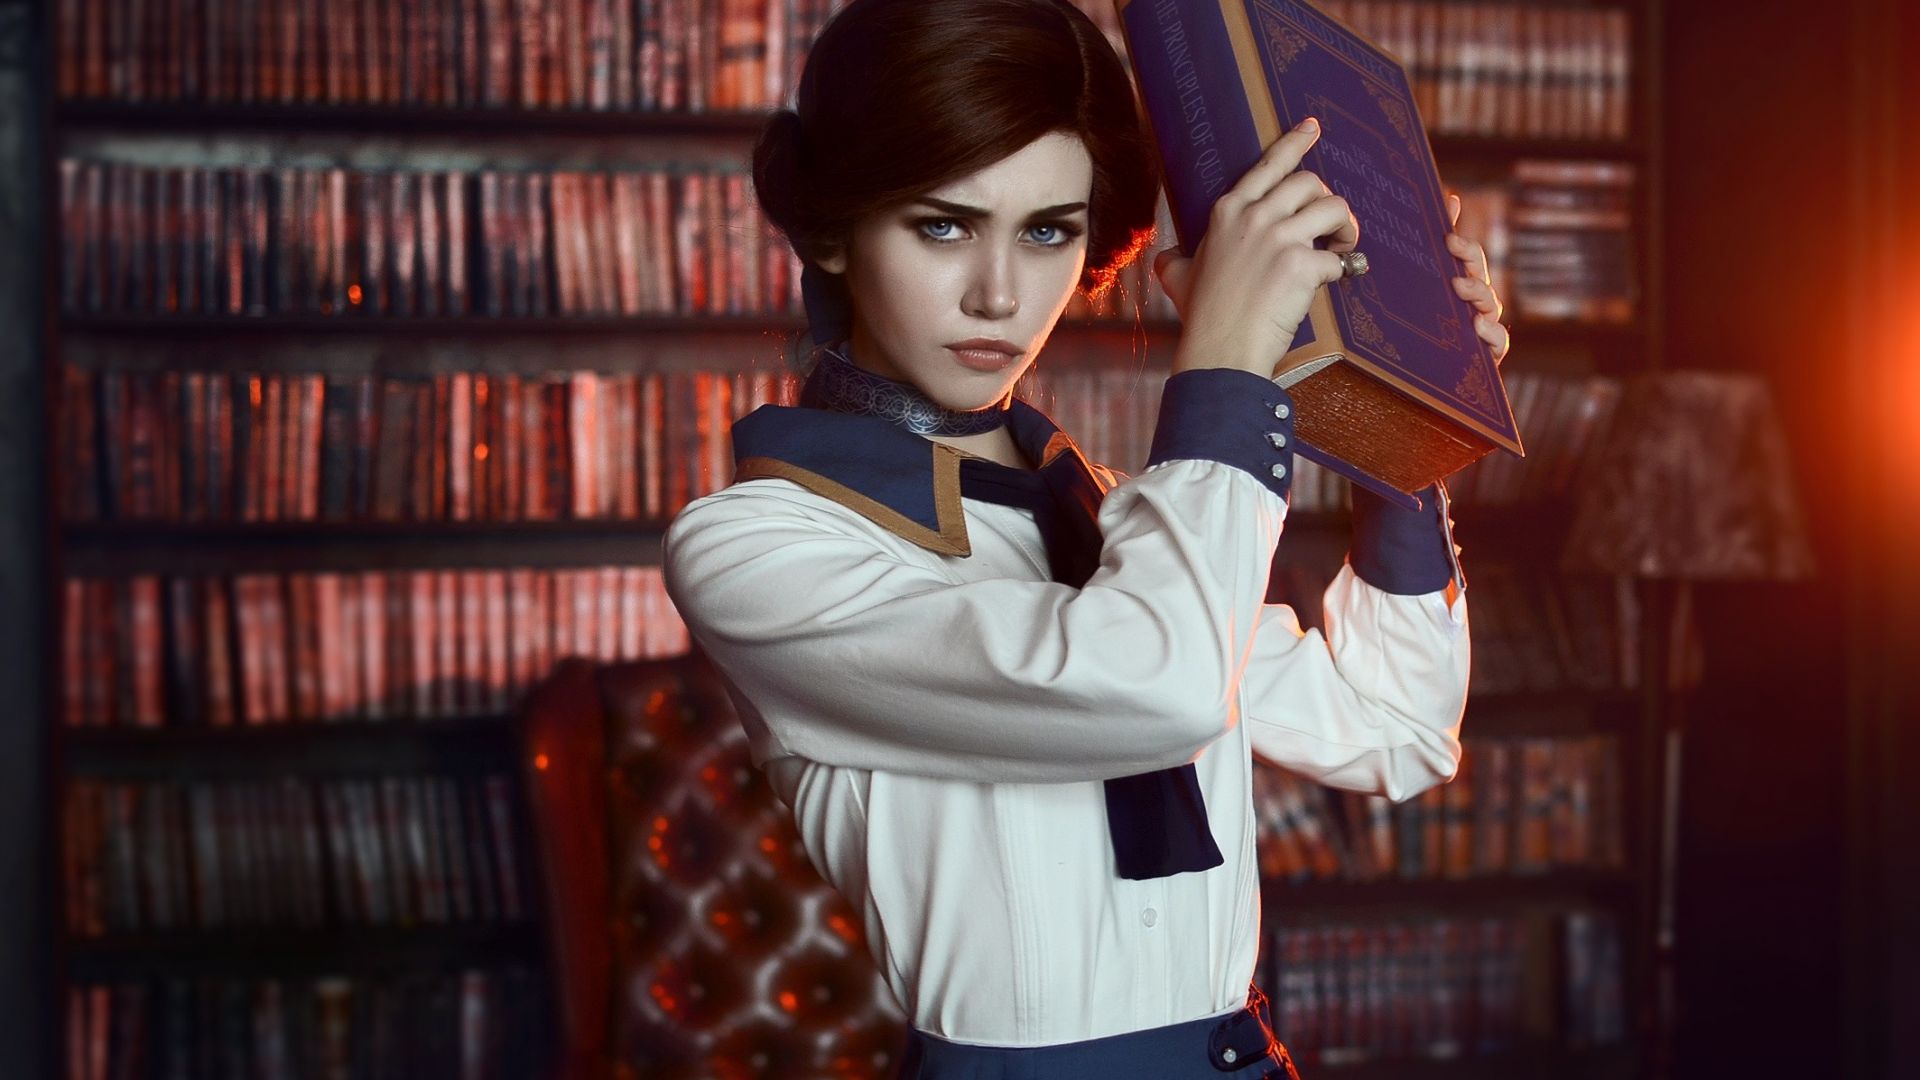 Wallpaper BioShock Infinite, Elizabeth, cosplay, library, book